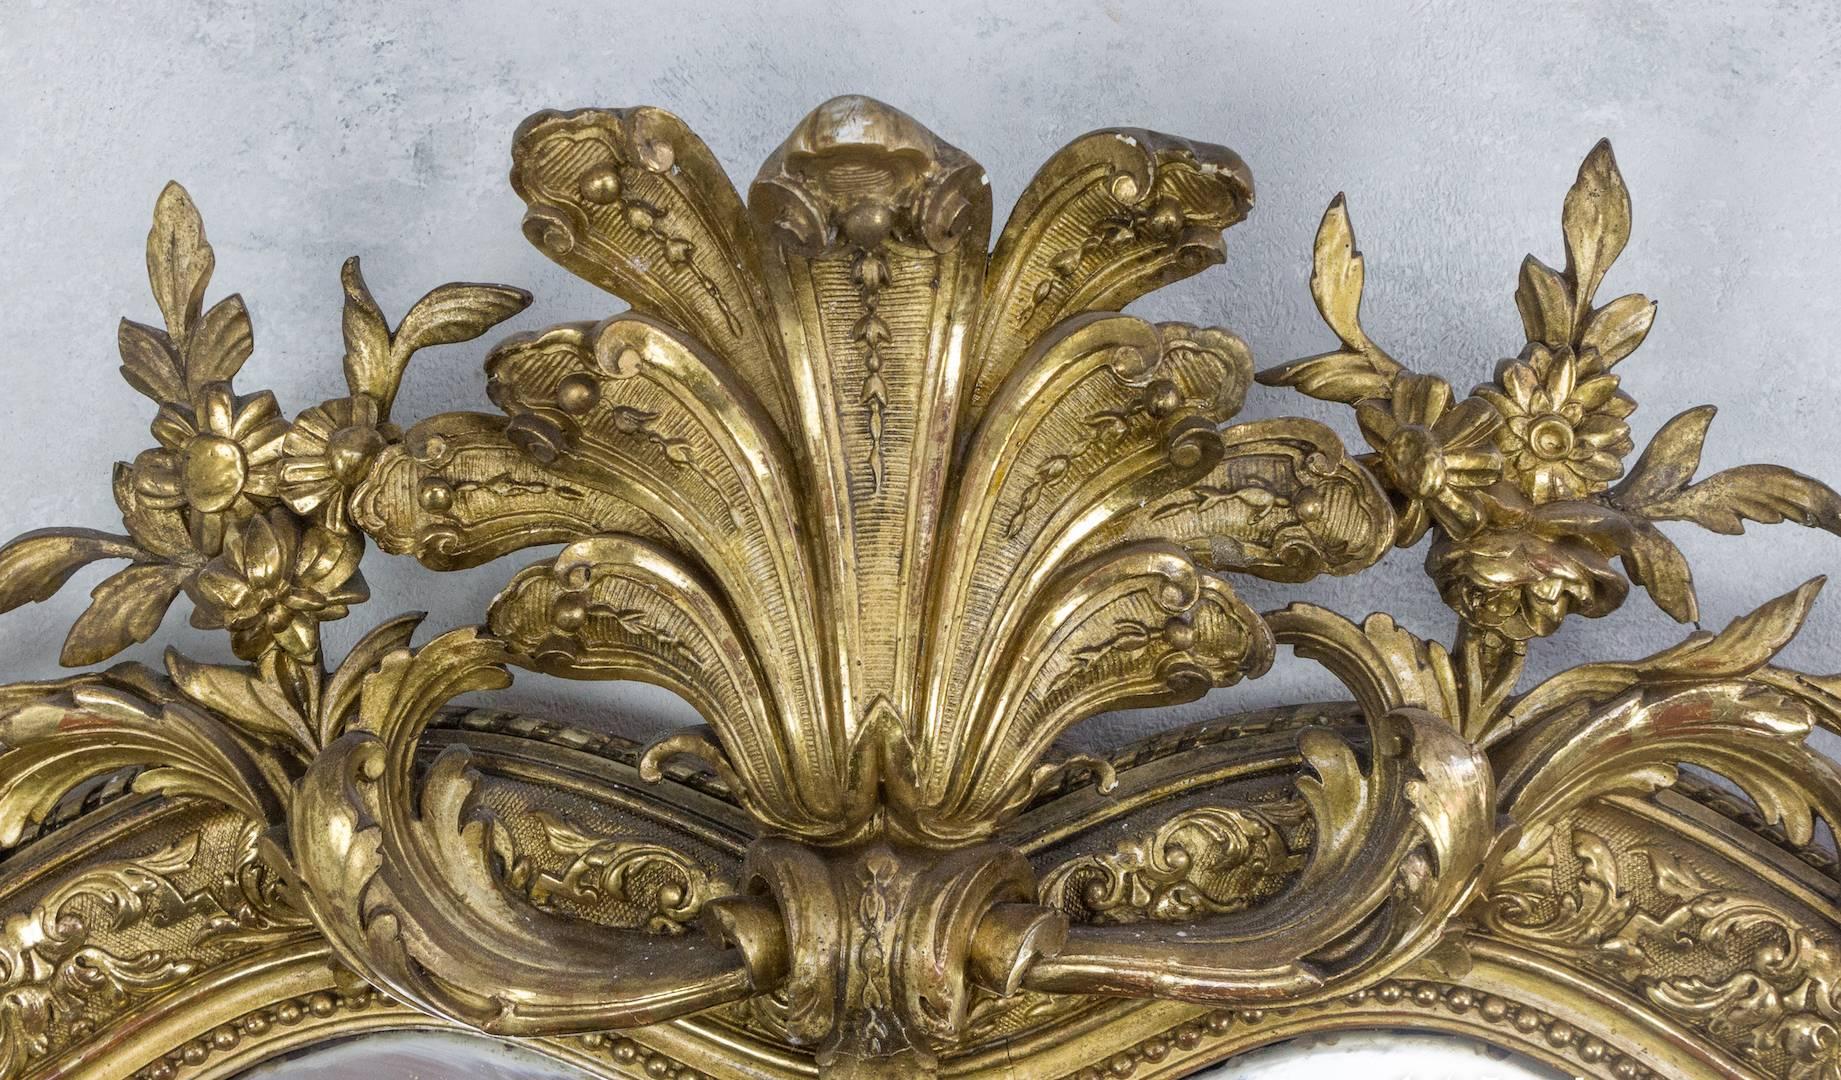 Ornate 19th Century French Gilt Framed Beveled Mirror For Sale 3